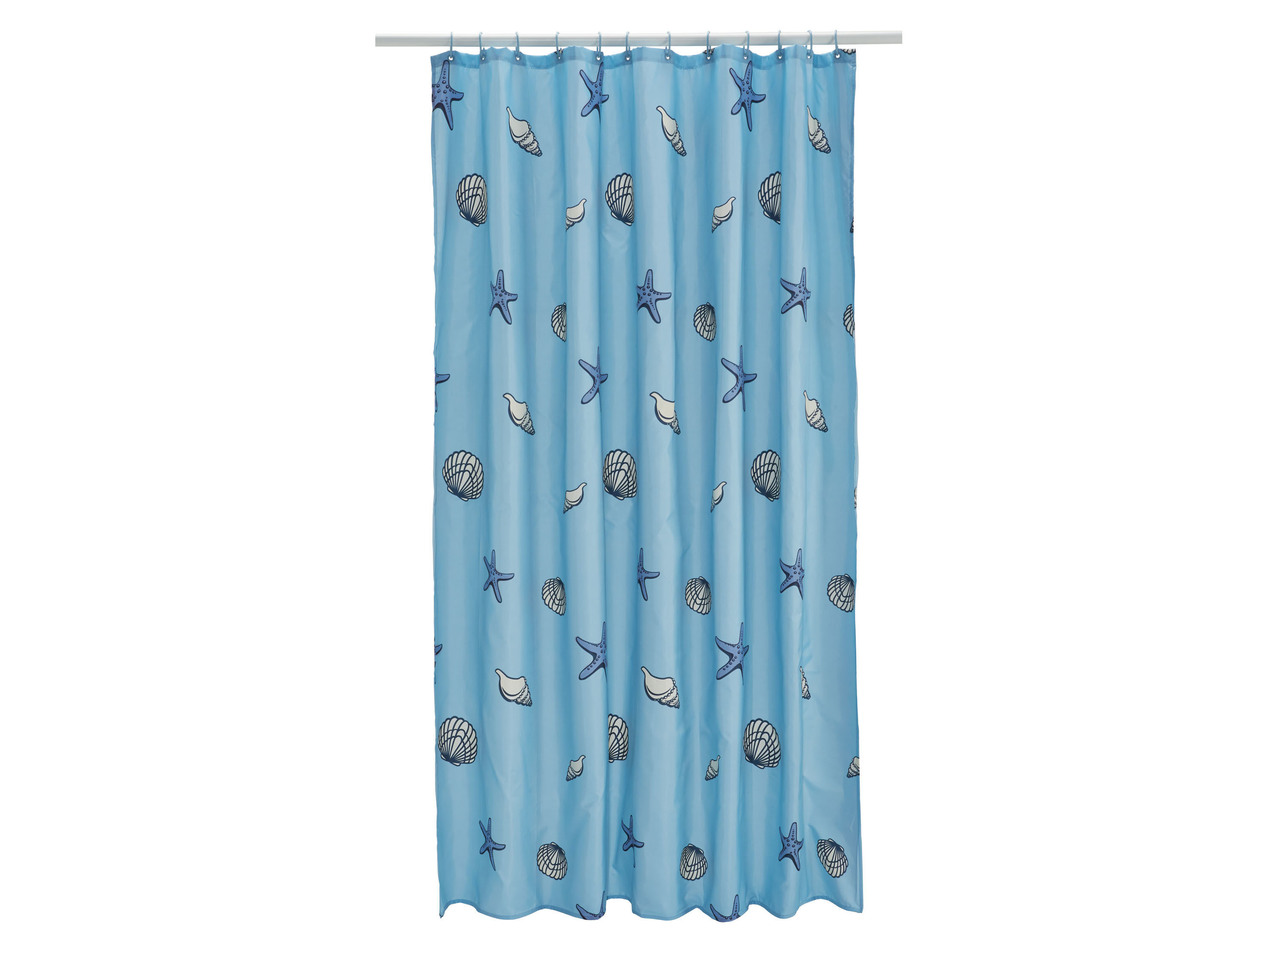 Shower Curtain, 180x200cm